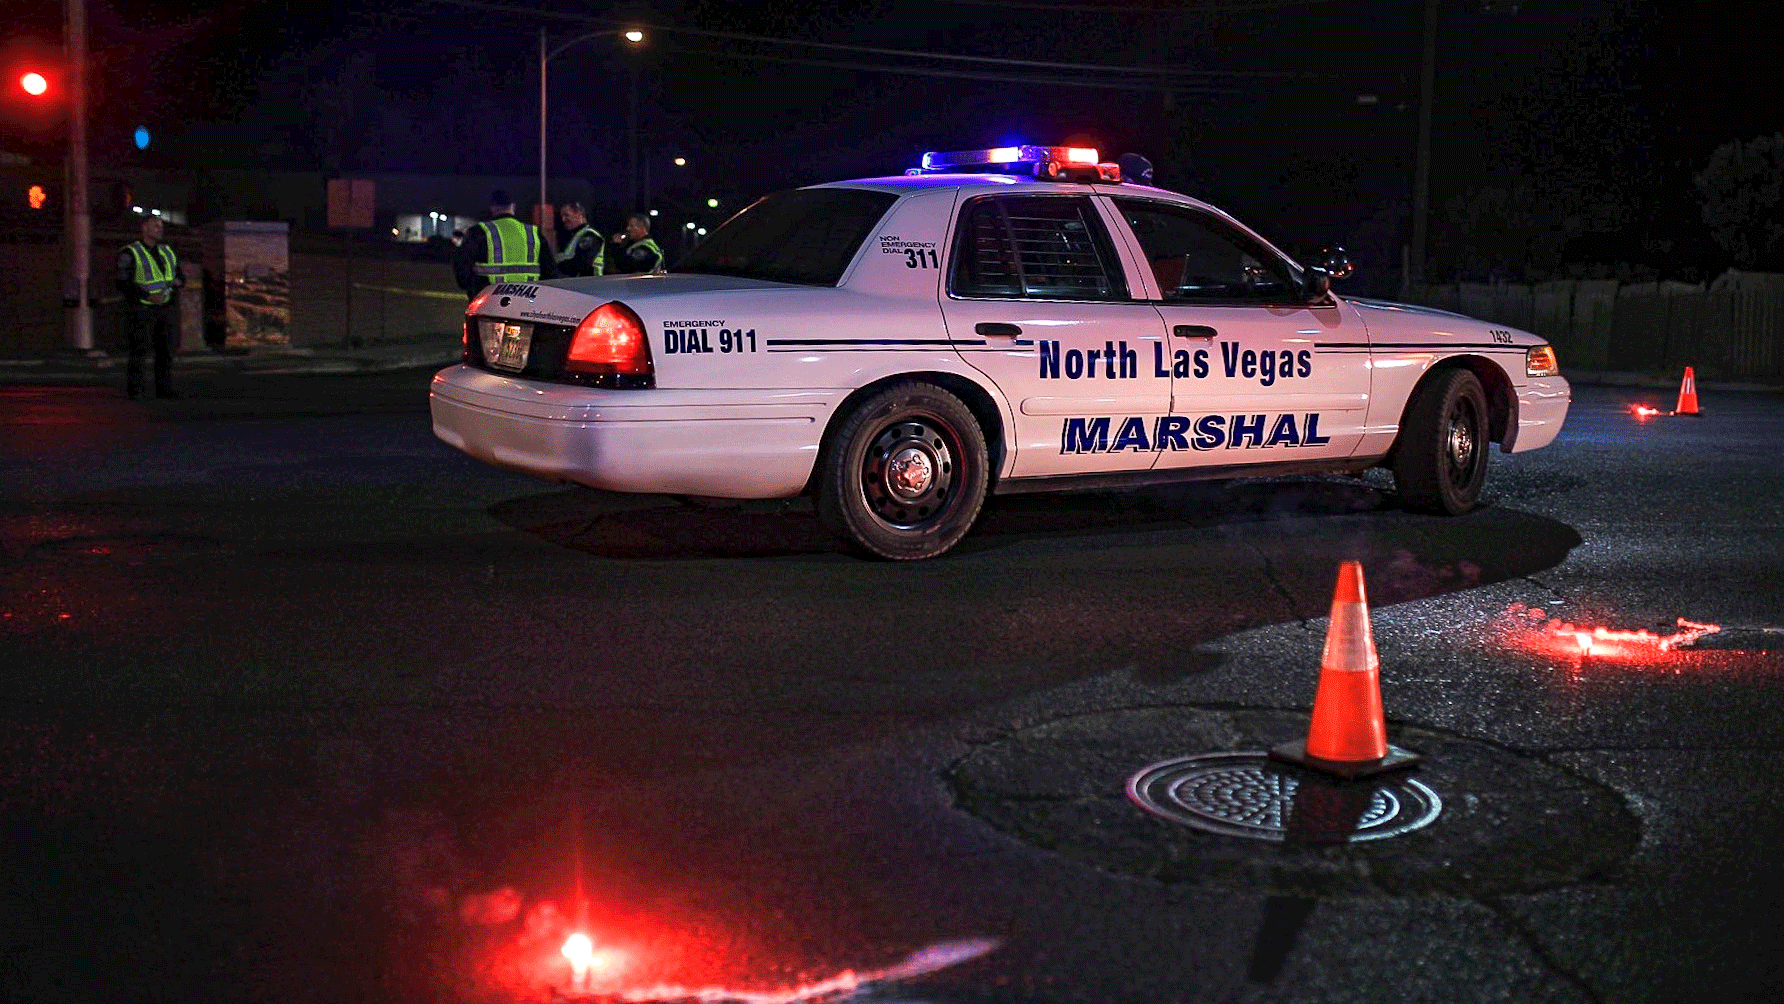 Woman struck and killed by vehicle in North Las Vegas - FOX5 Vegas - KVVU